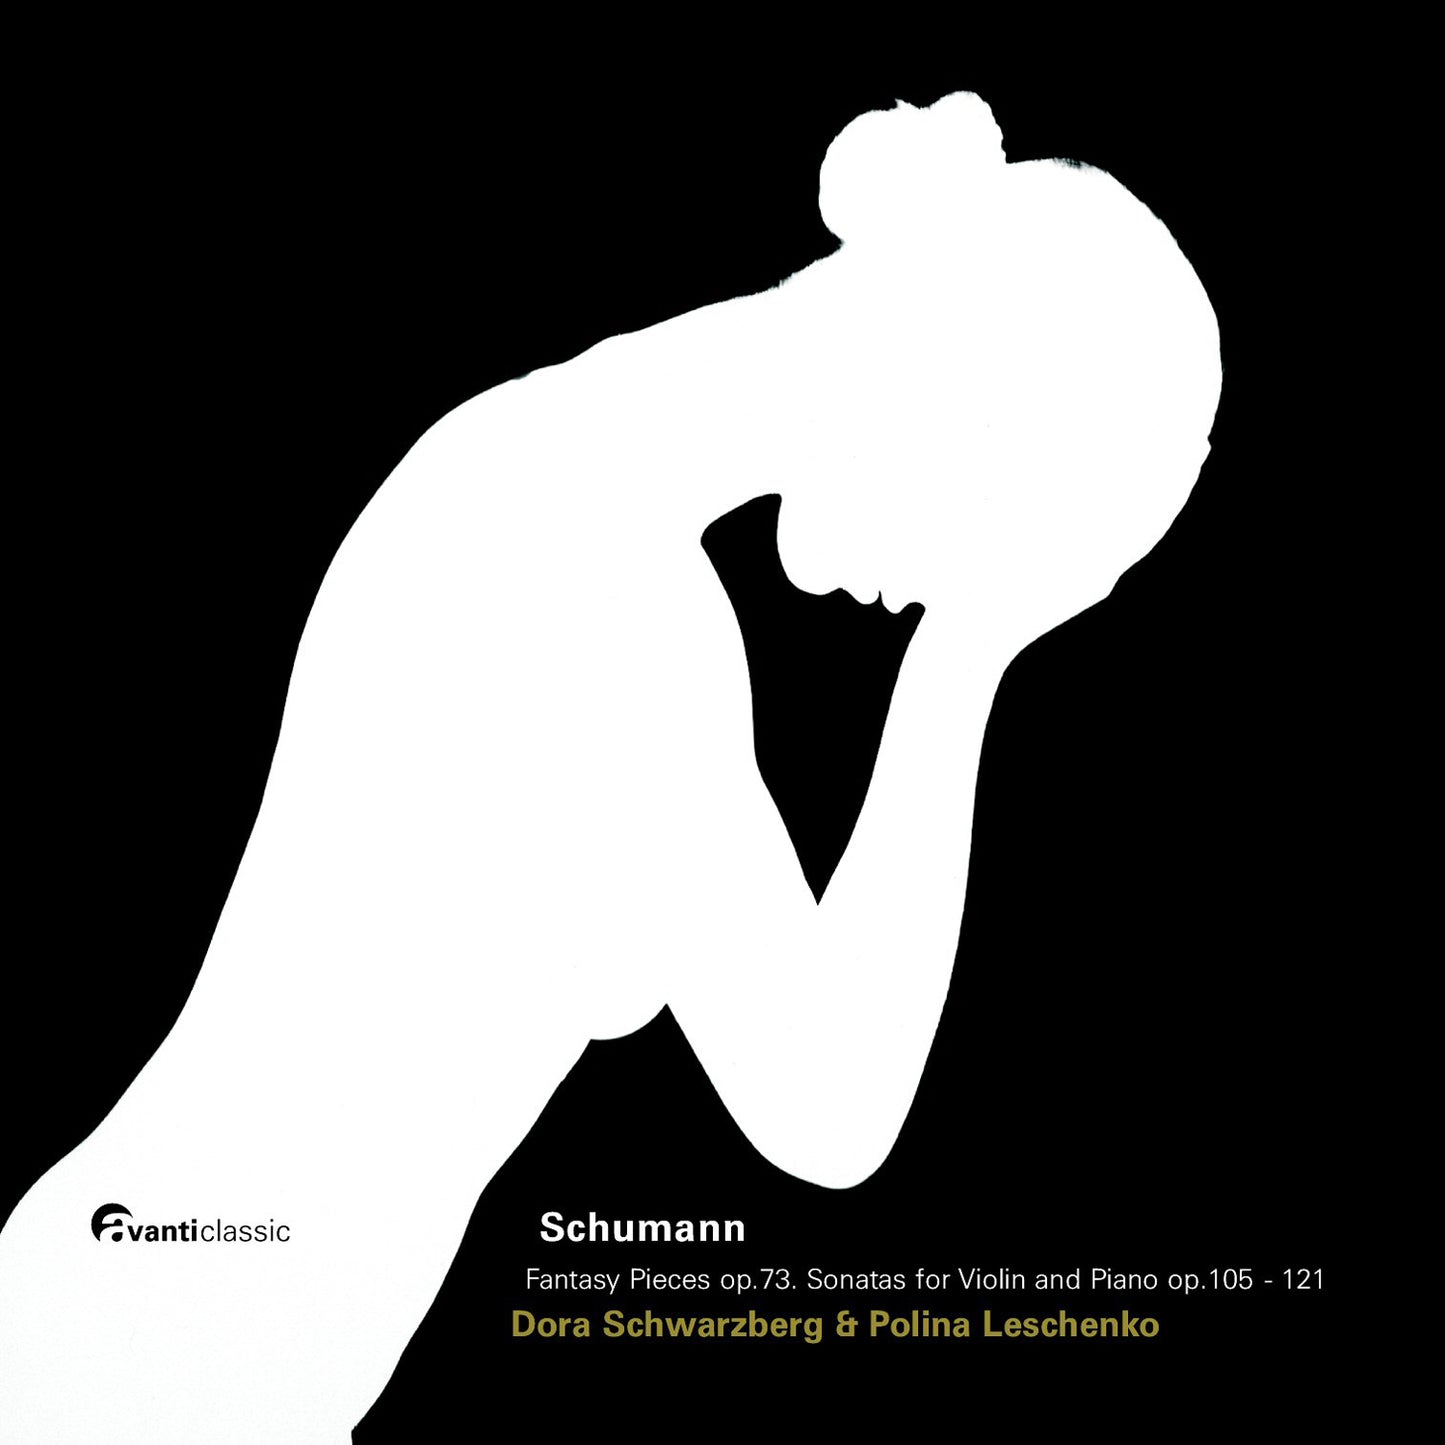 Schumann : the Violin Sonatas and Fantasiestücke – Dora Schwarzberg – Polina Leschenoko (1 Hybrid SACD)